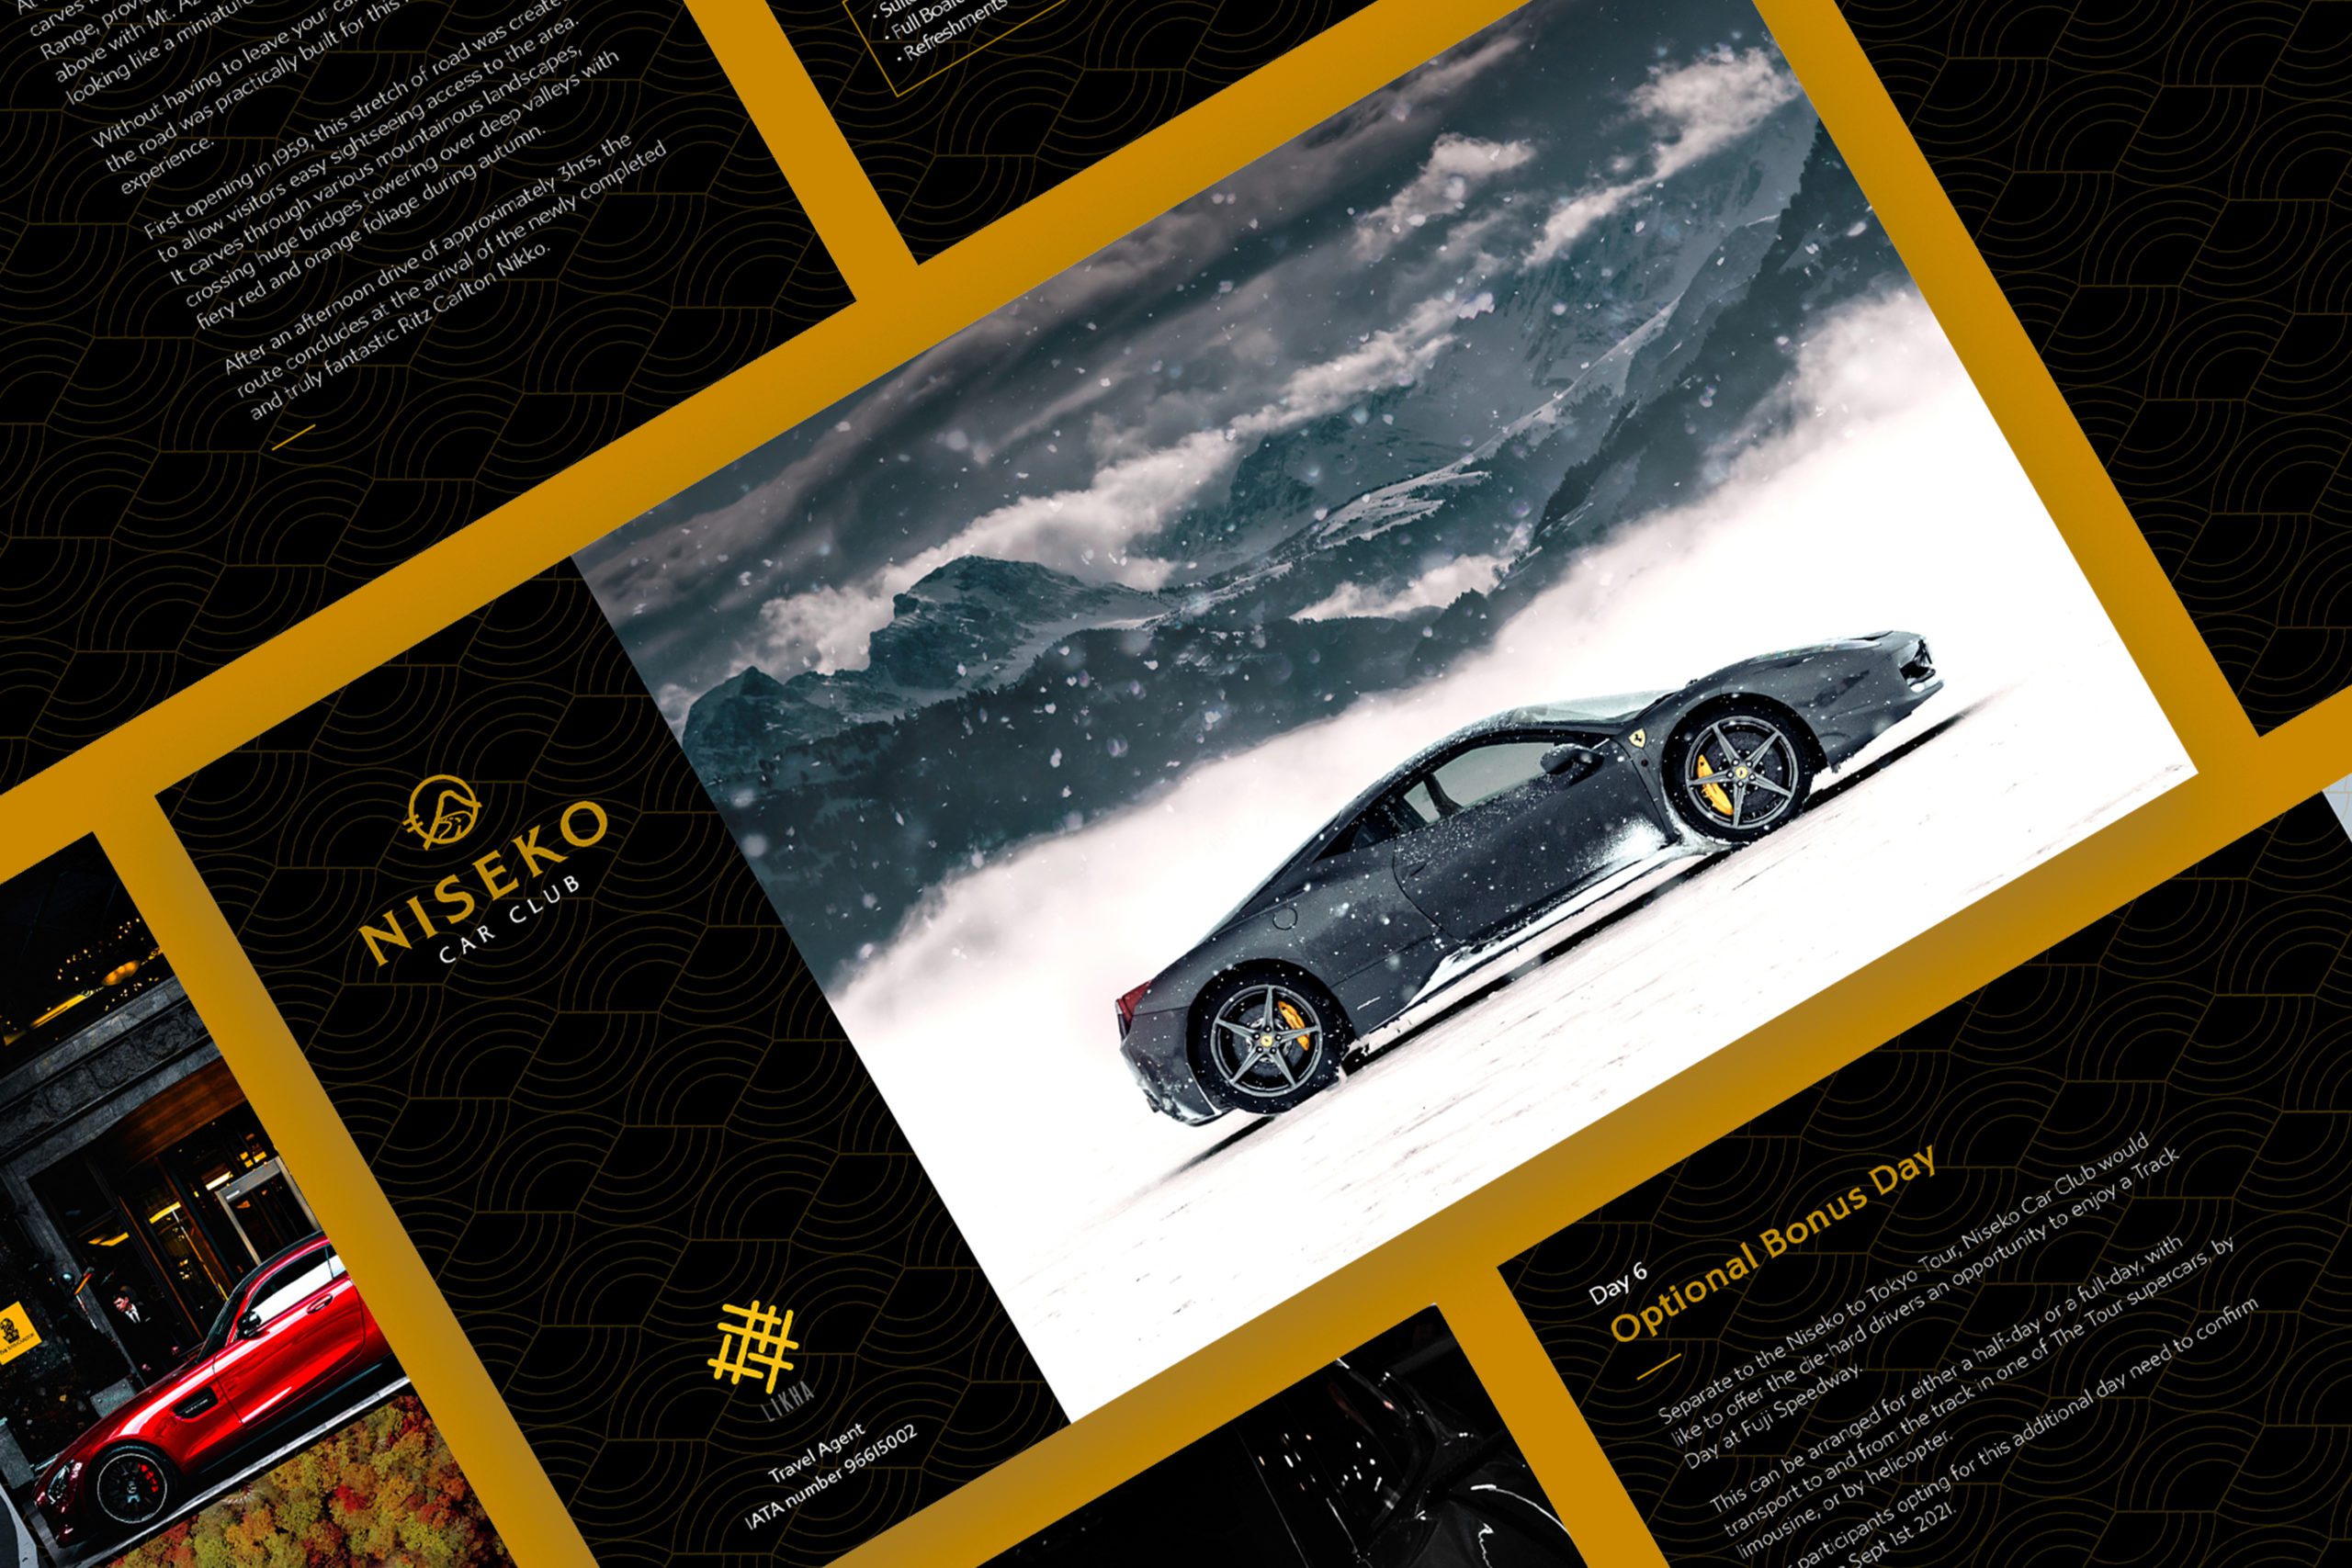 Niseko Car Club Brochure Design